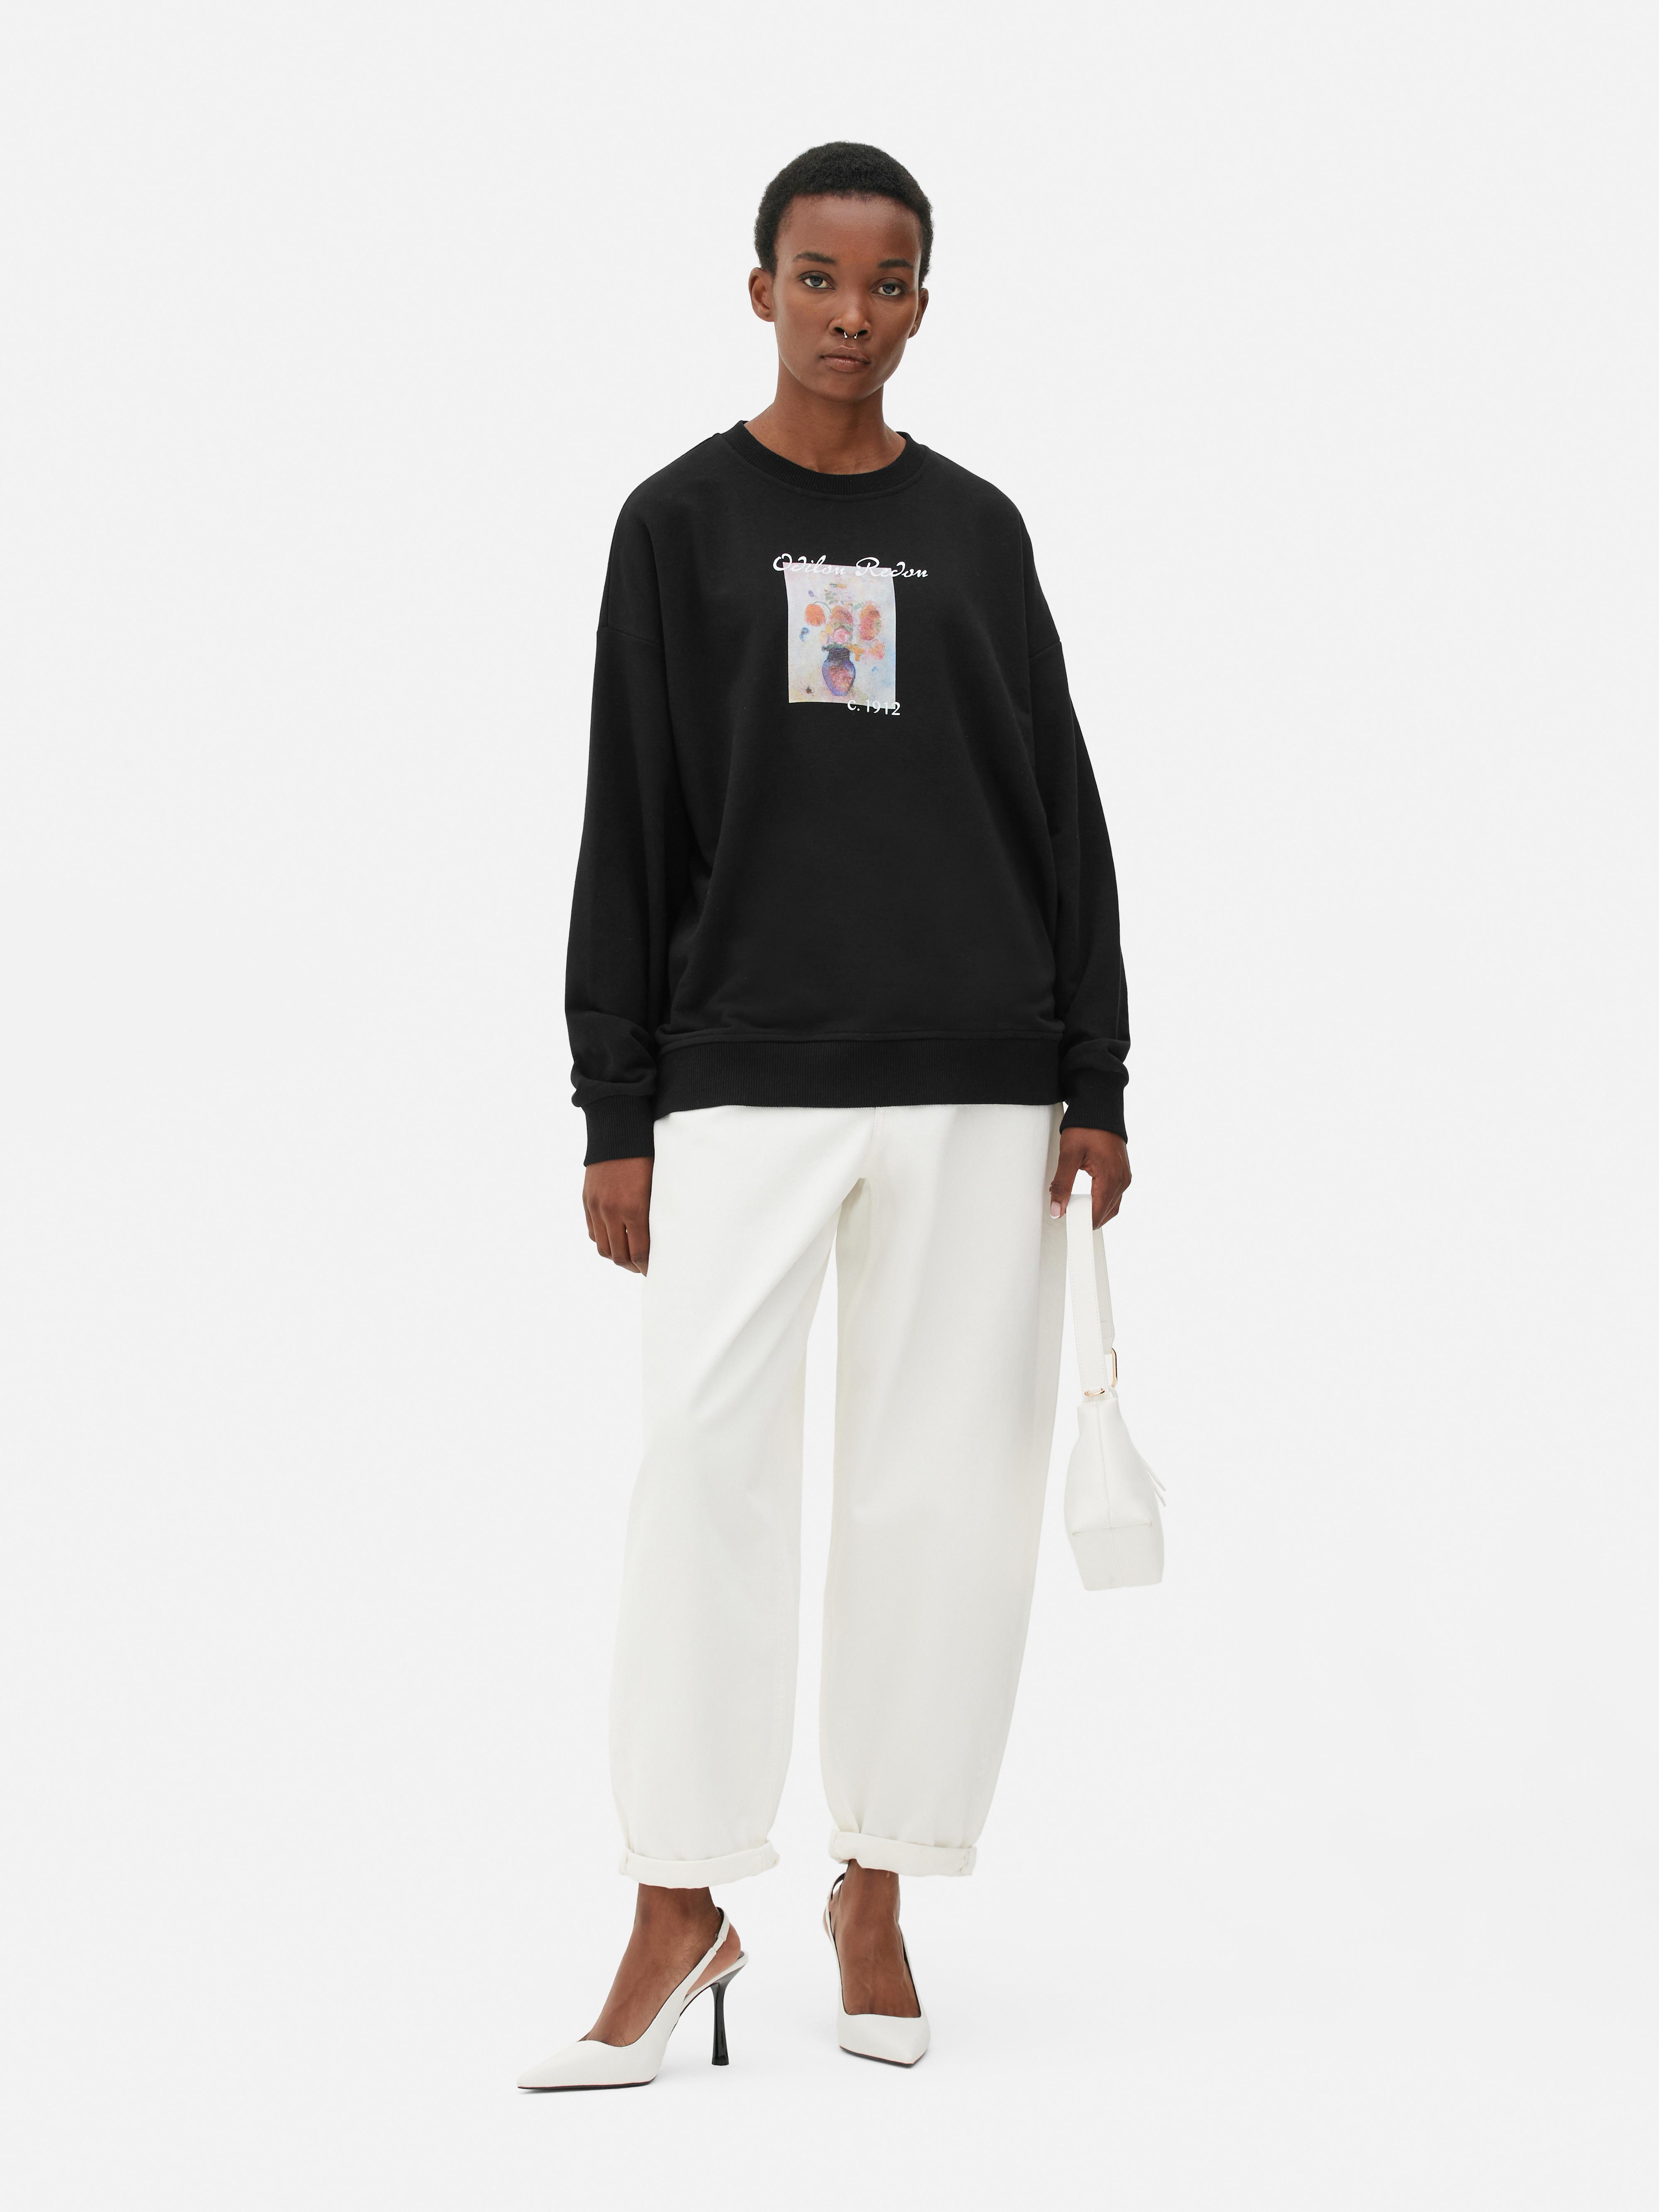 Women's Hoodies & Sweatshirts | Oversized, Cropped, Zip Up | Penneys